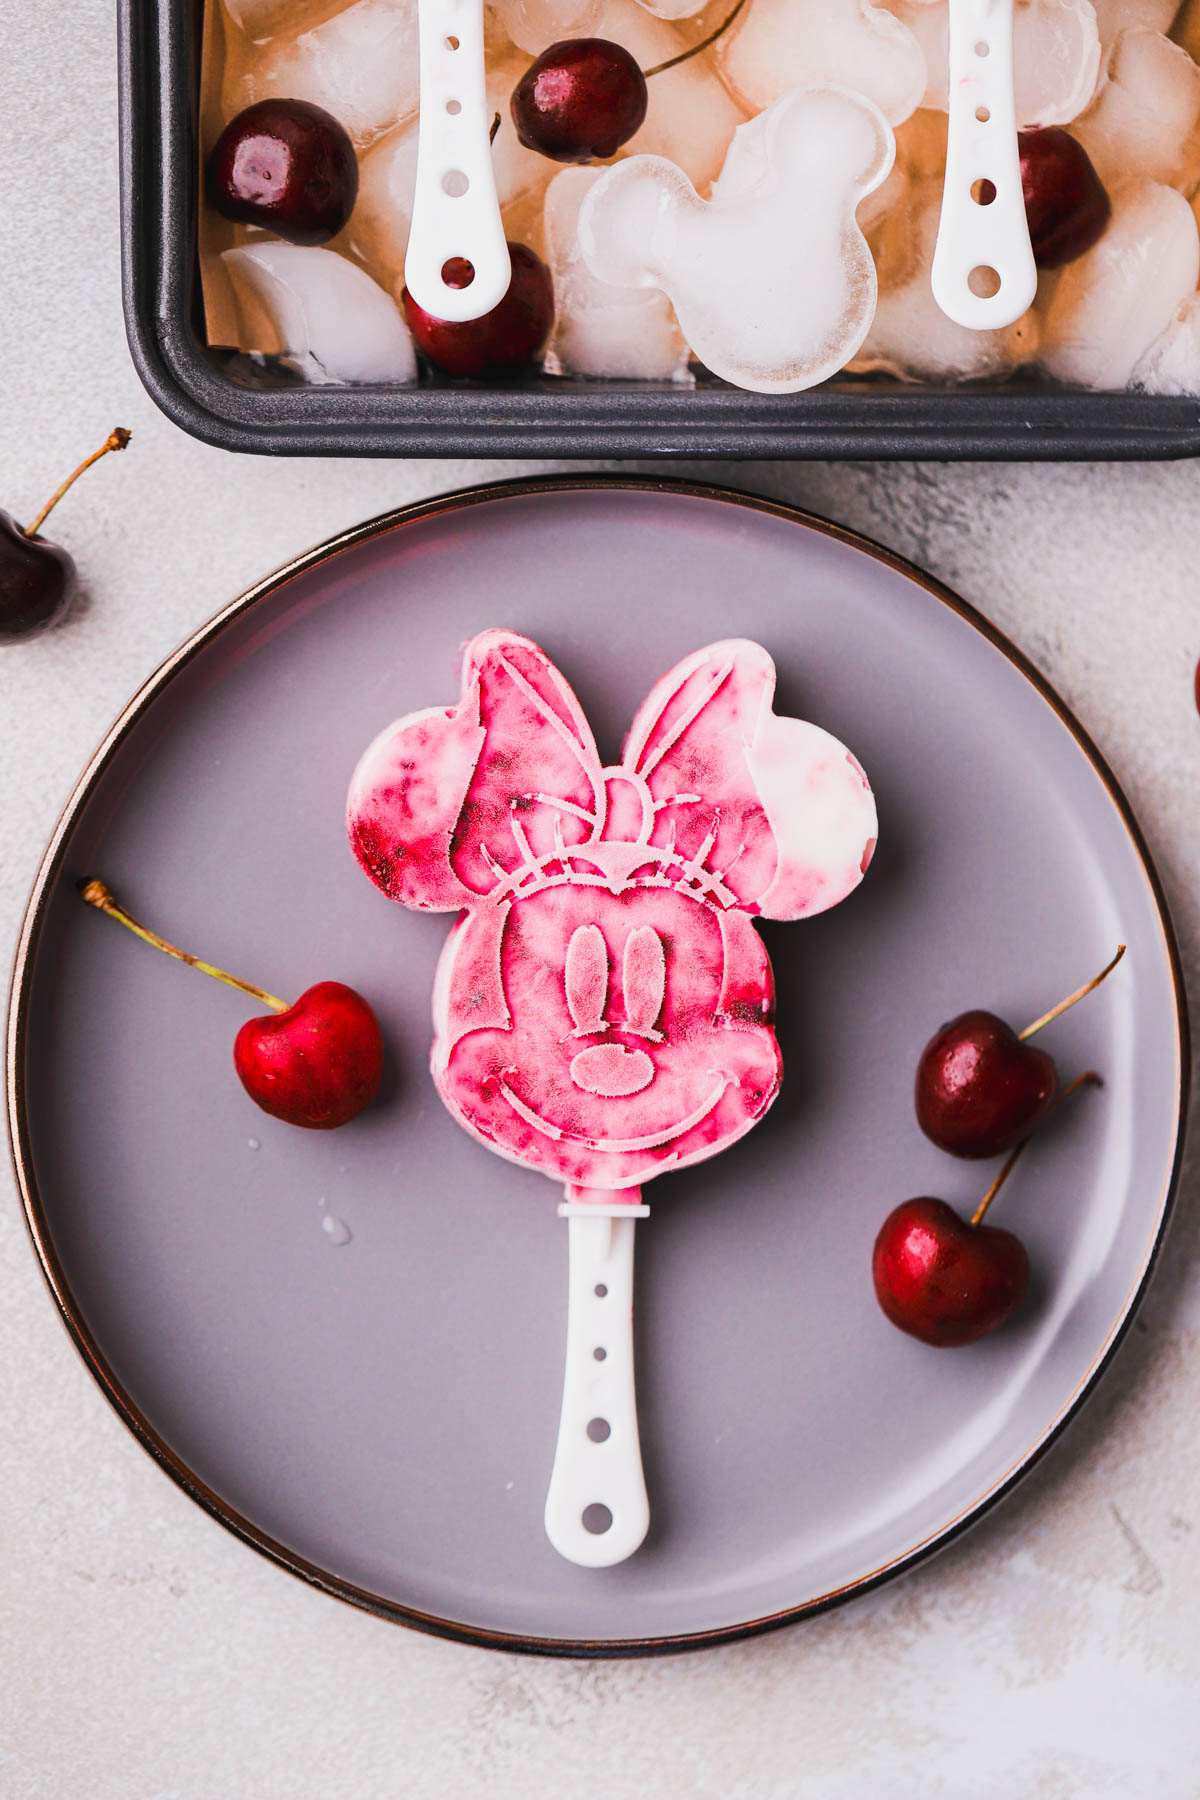 Minnie Mouse cherry yogurt popsicle.  